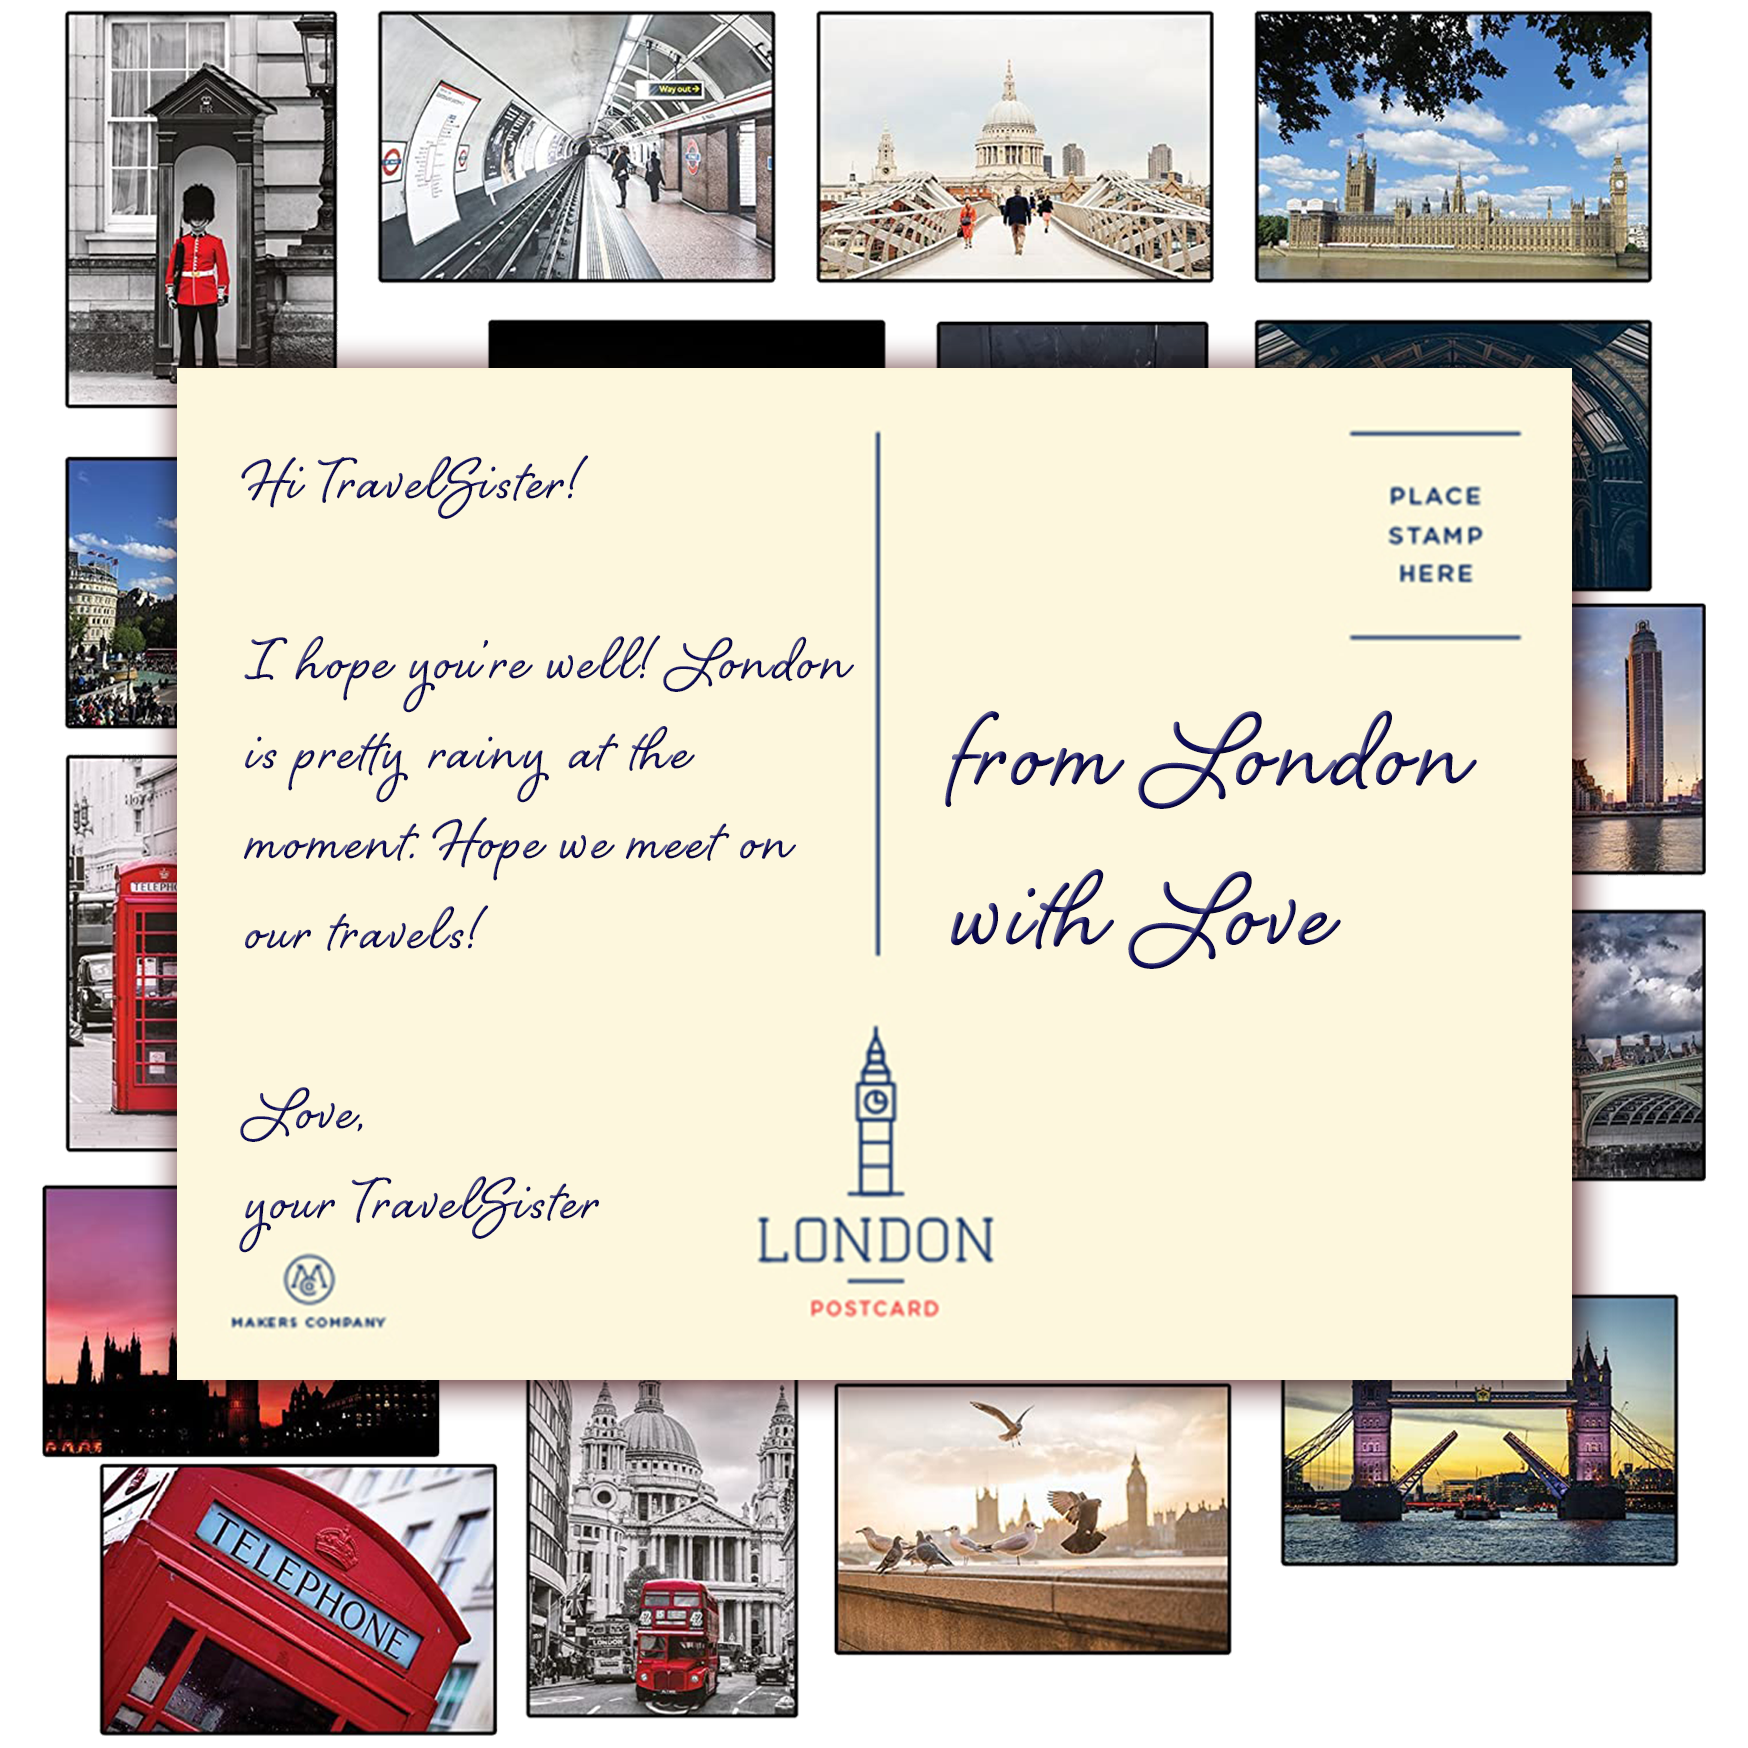 TravelSisters_postcard_London